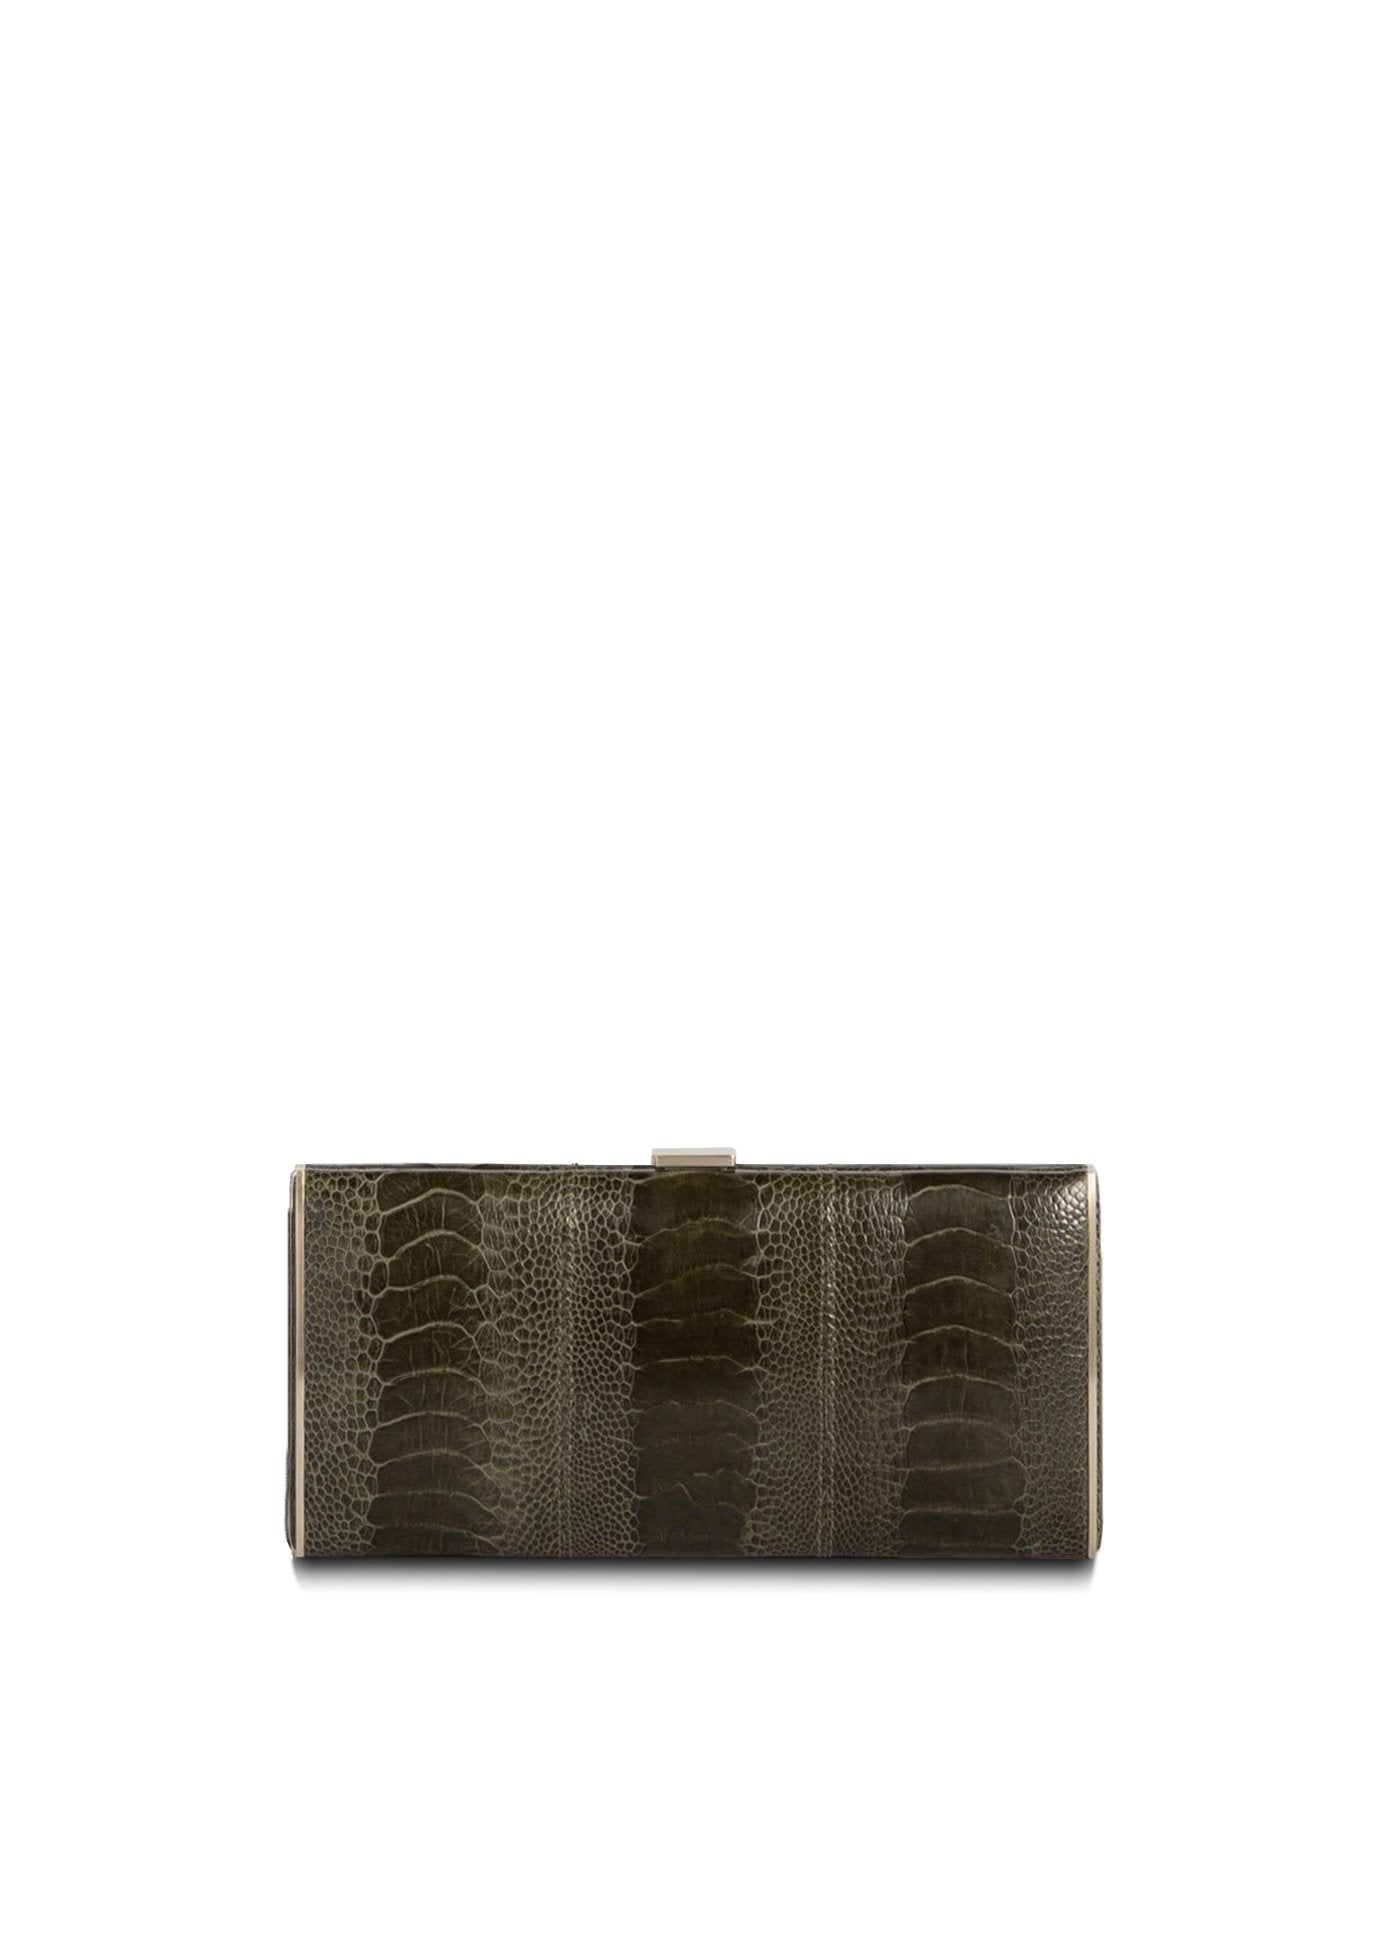 Box Wallet in Green Ostrich Leg | Darby Scott